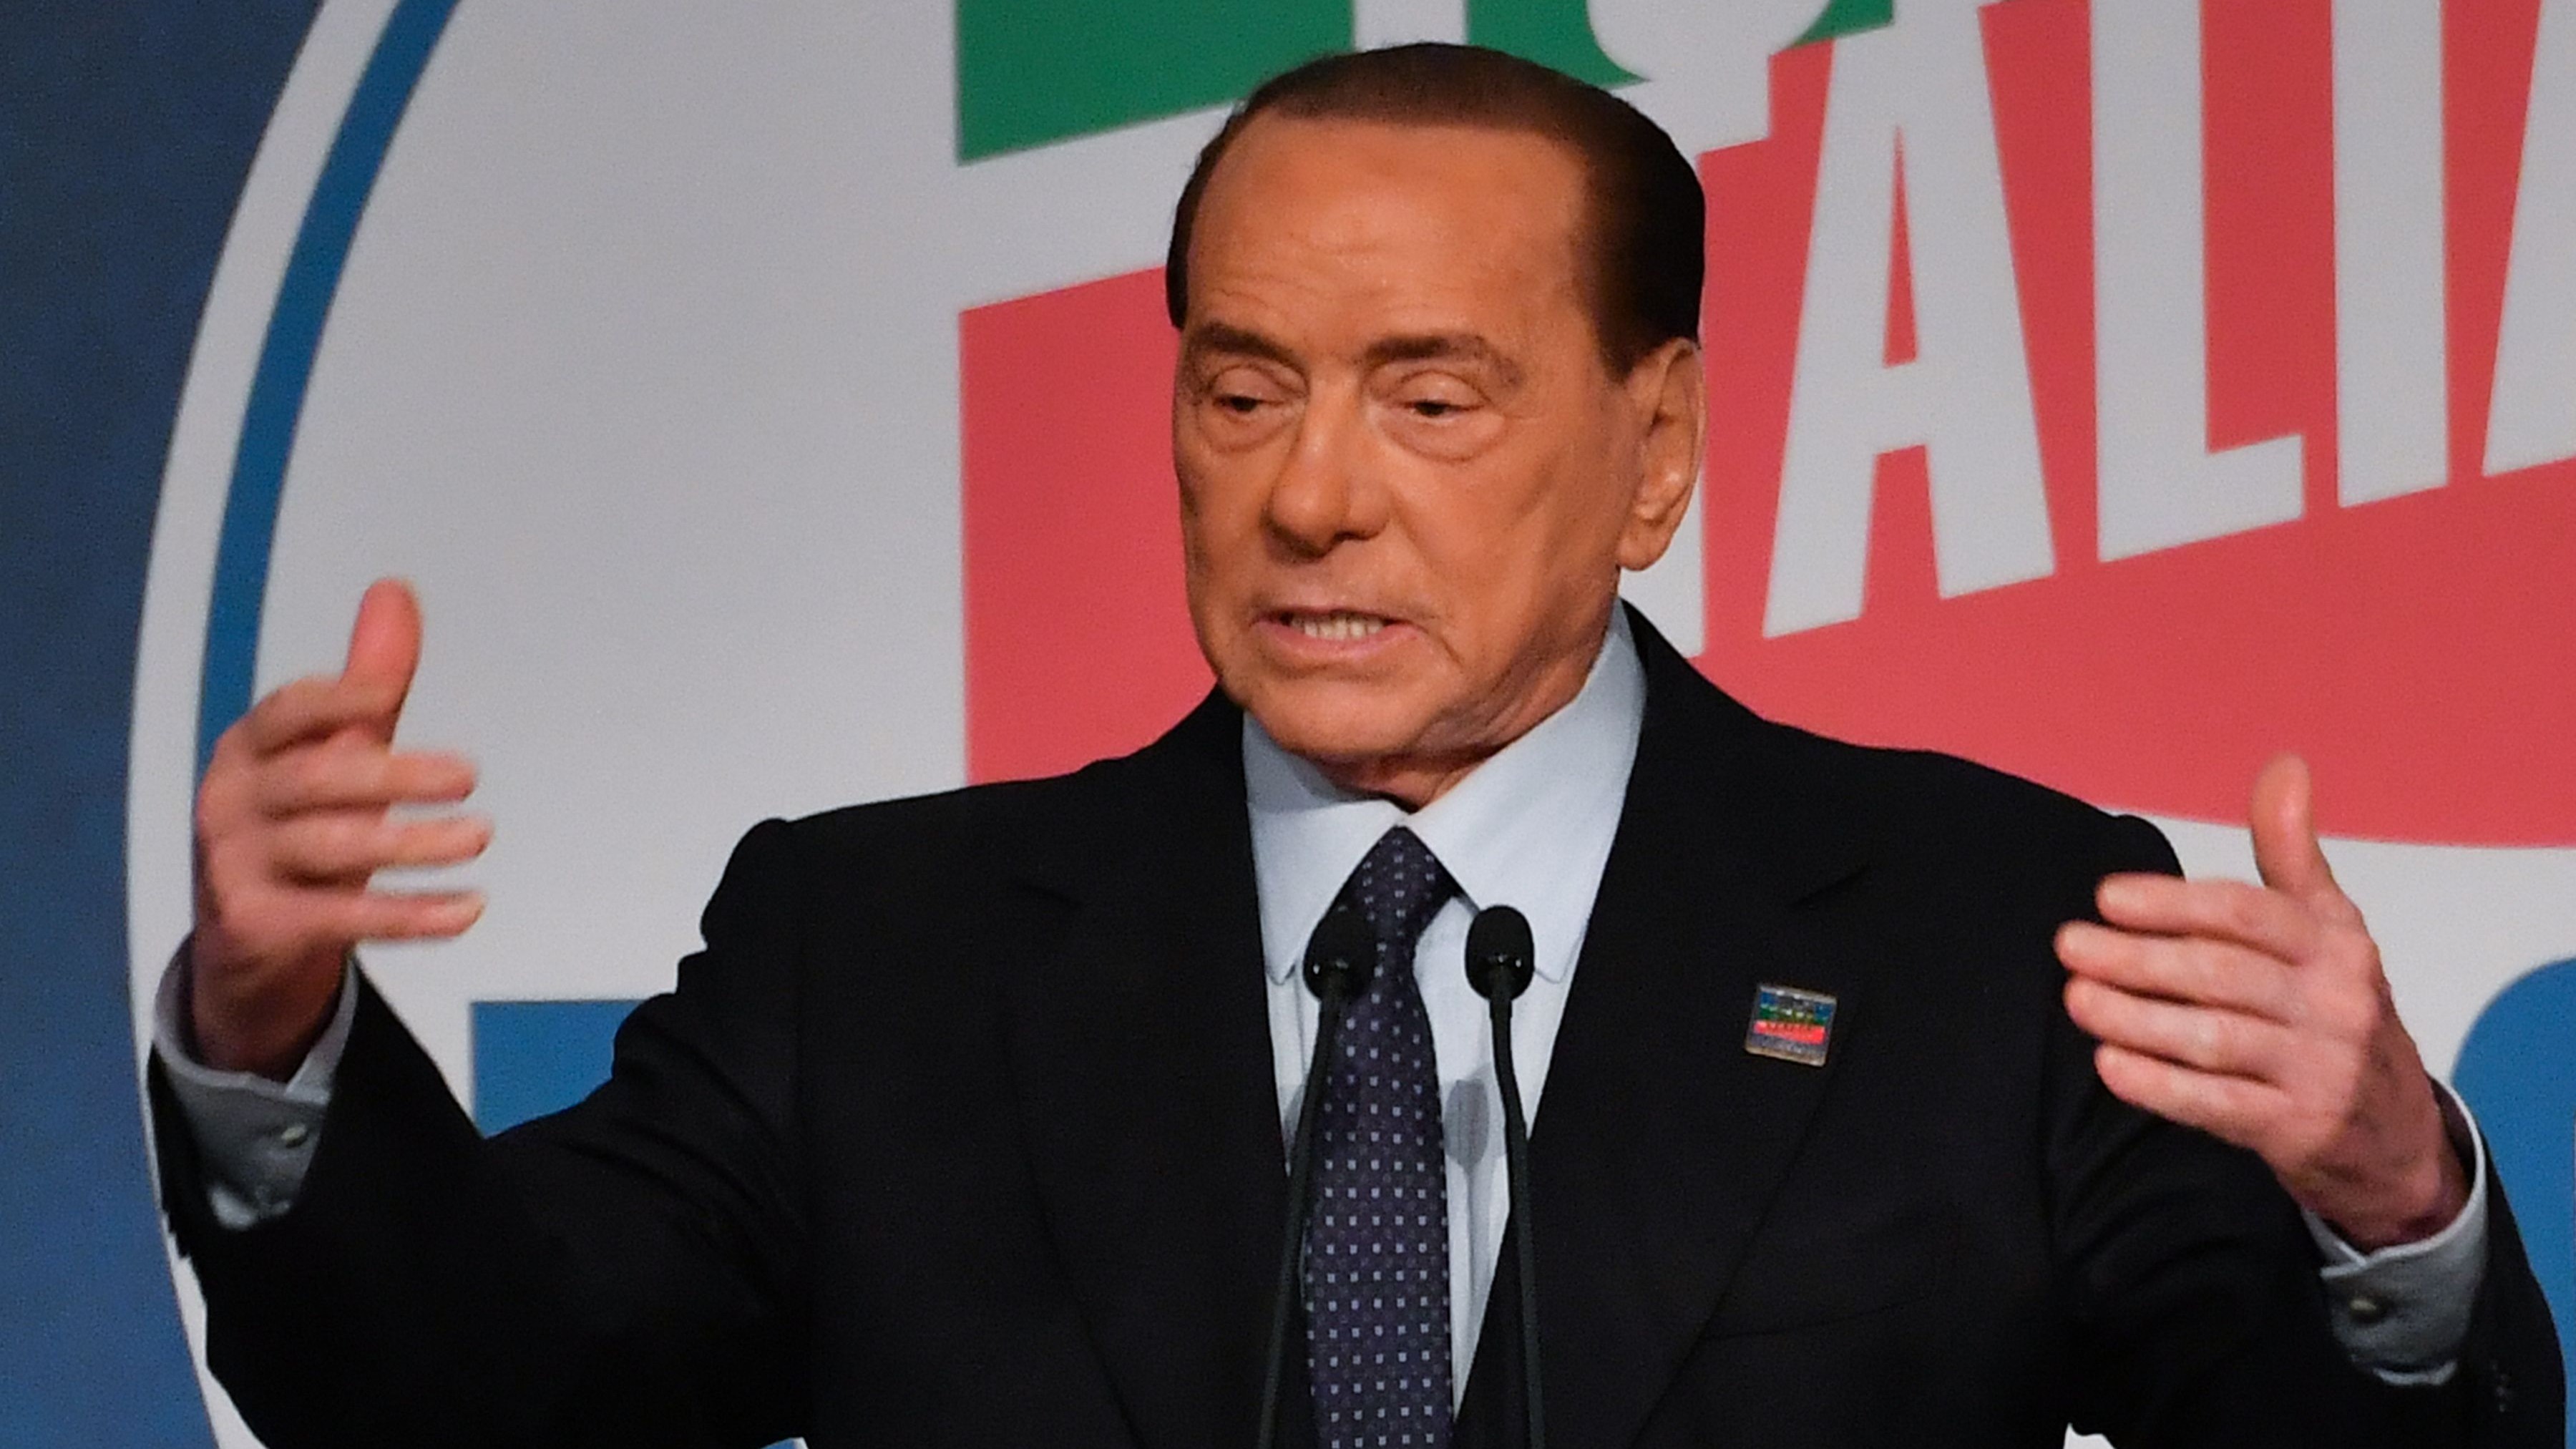 Serie B - Les ambitions de Silvio Berlusconi avec Monza